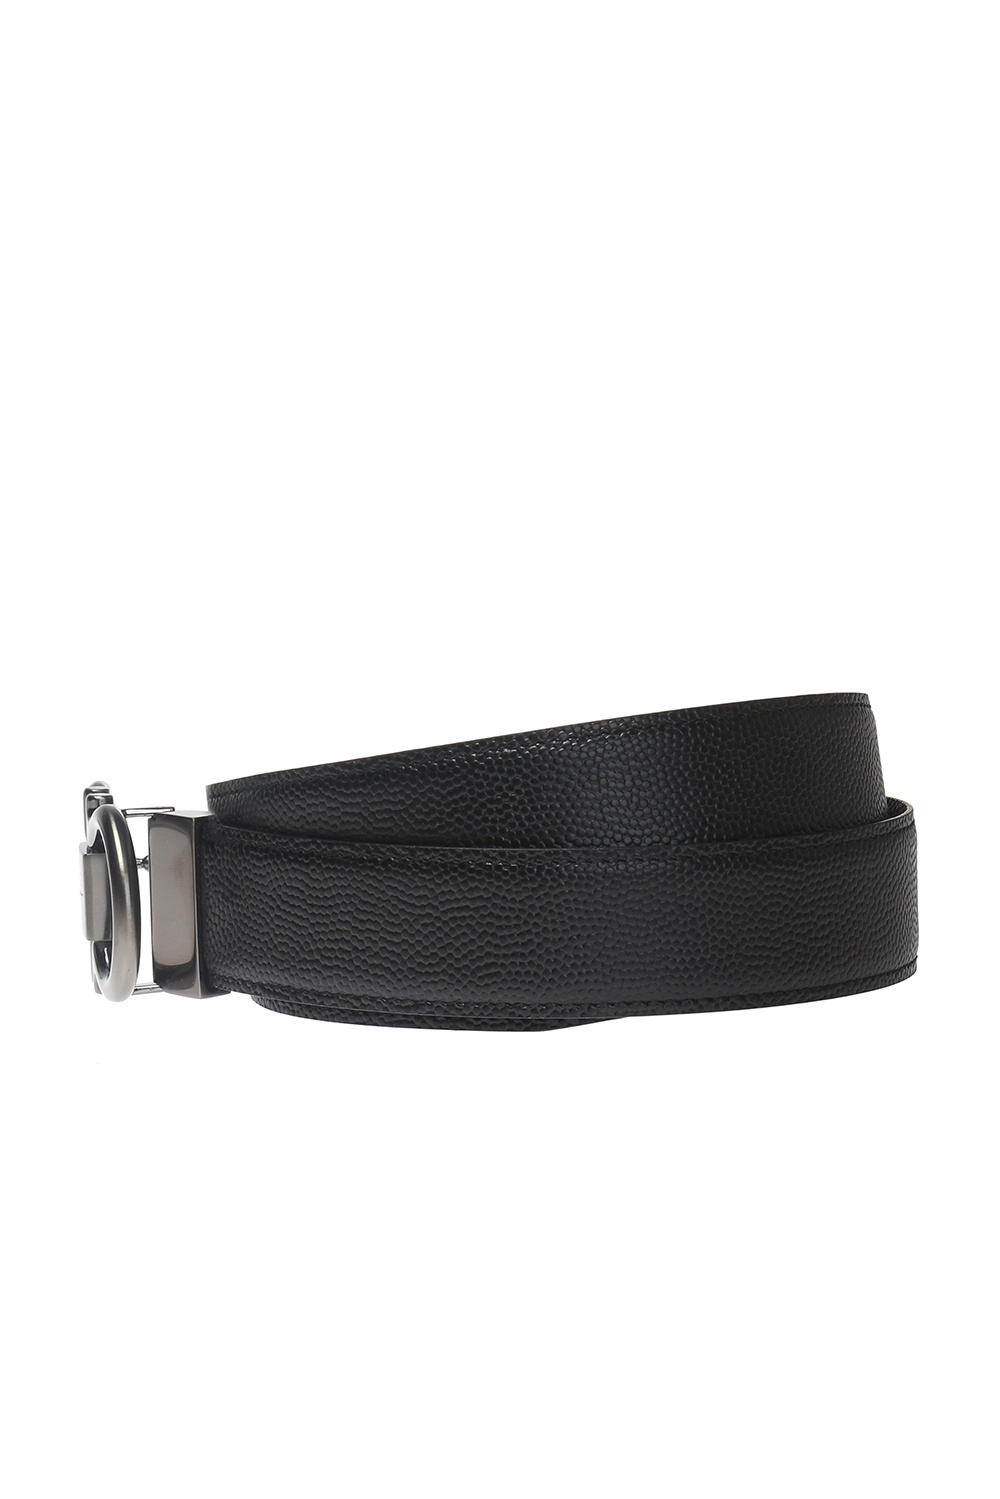 Salvatore Ferragamo Branded belt